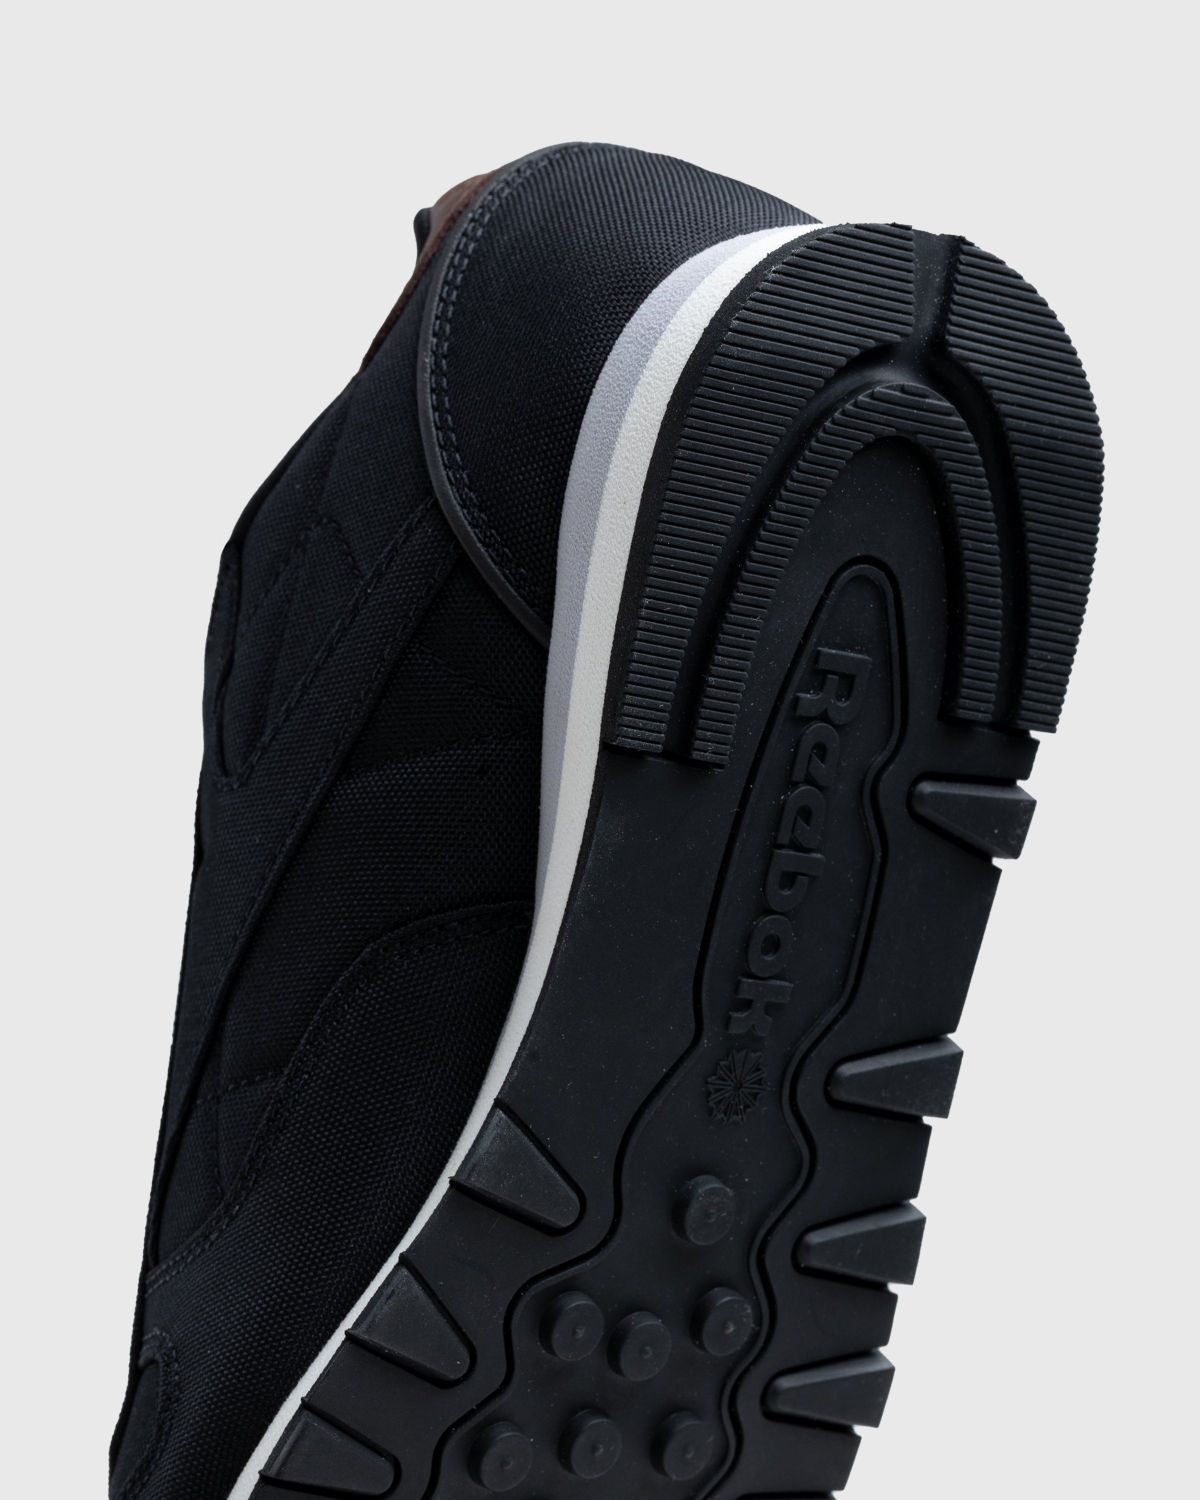 Reebok – Classic Leather Black/Chalk/Brown - Sneakers - Black - Image 6